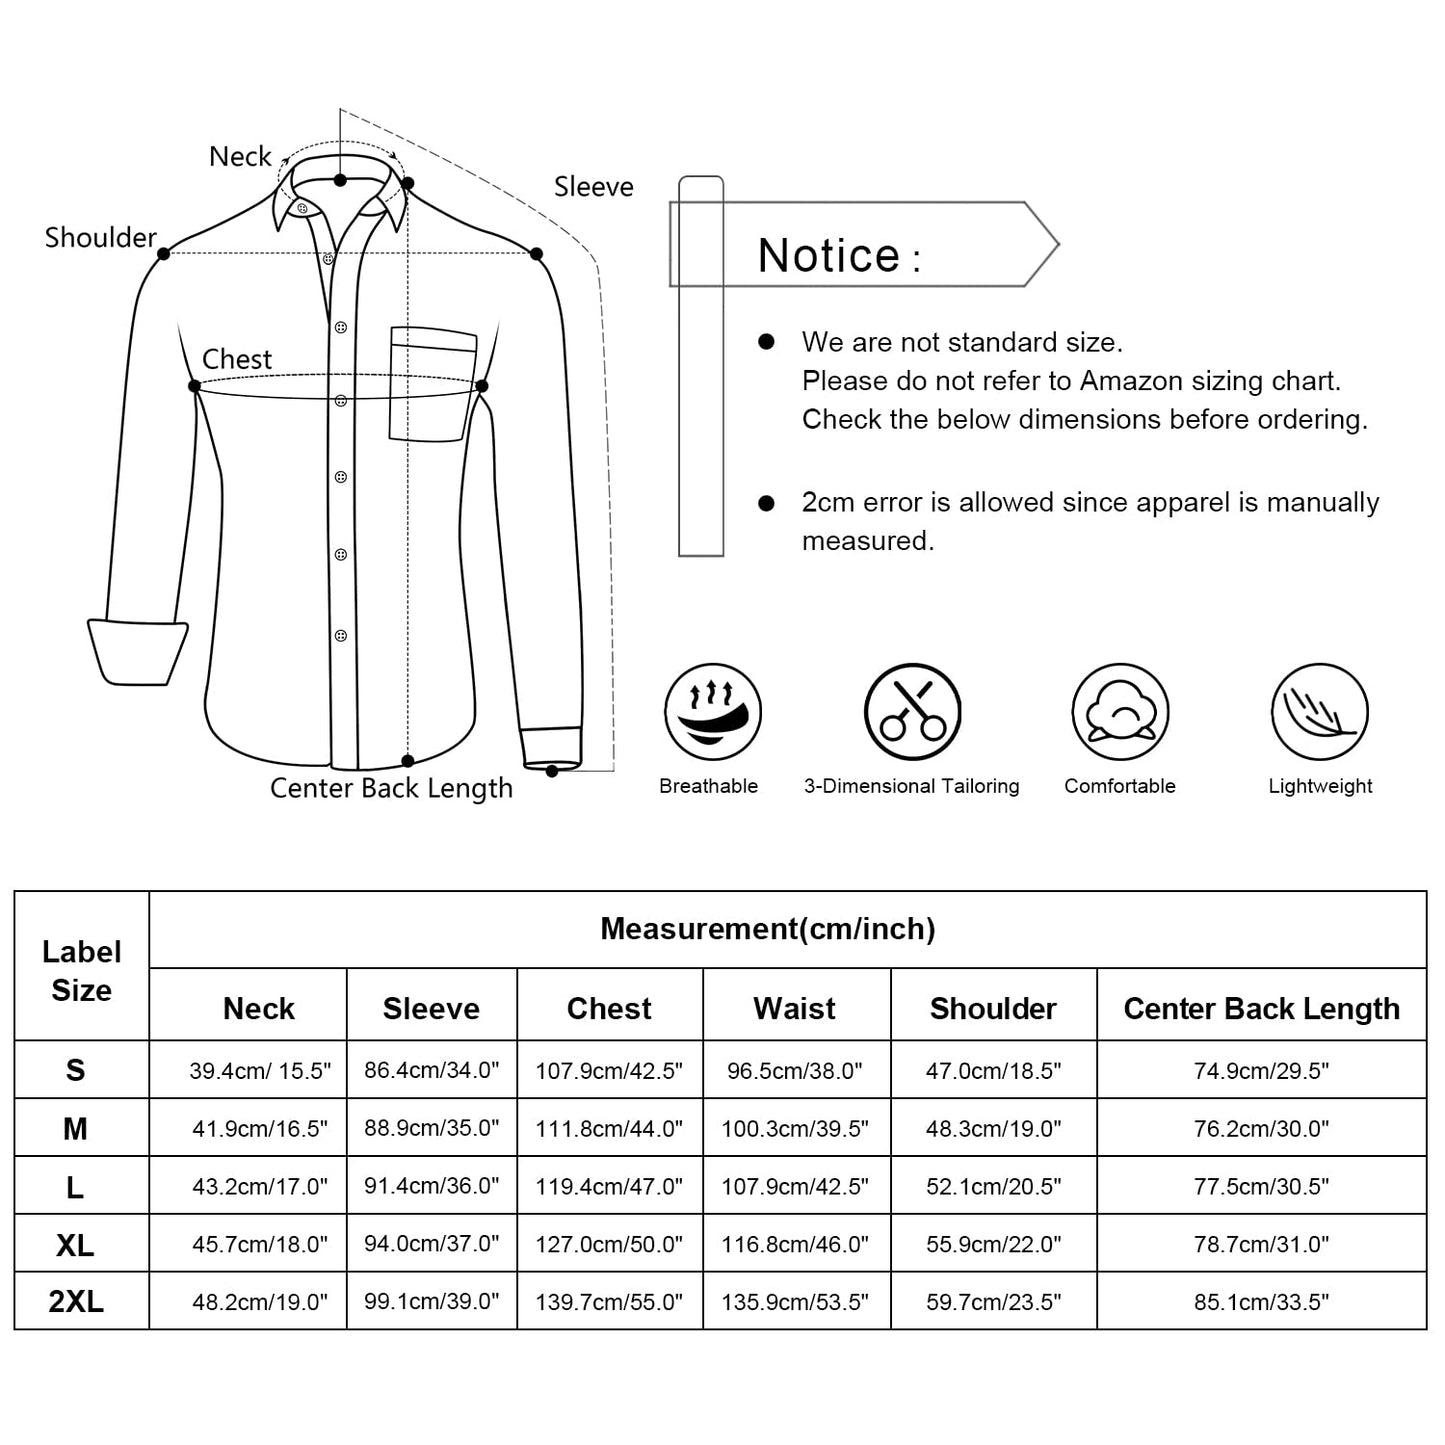 Men's Business Slim Fit Dress Shirt Long Sleeve Patchwork Button-Down Shirt, 004-White+Gray